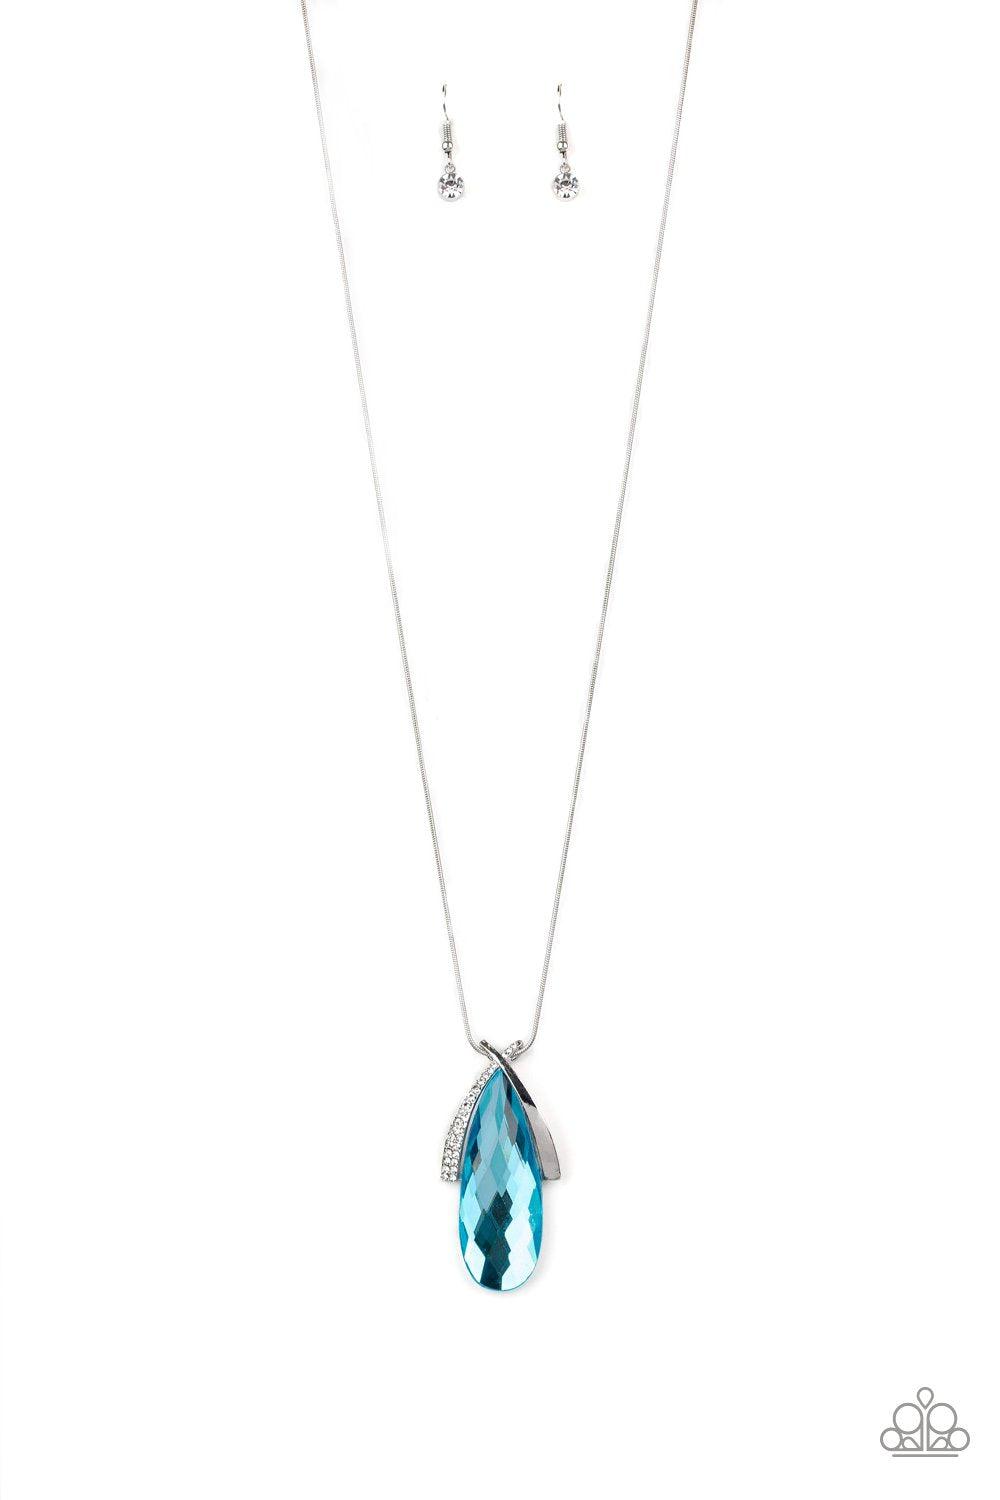 Stellar Sophistication Blue Rhinestone Pendant Necklace - Paparazzi Accessories- lightbox - CarasShop.com - $5 Jewelry by Cara Jewels